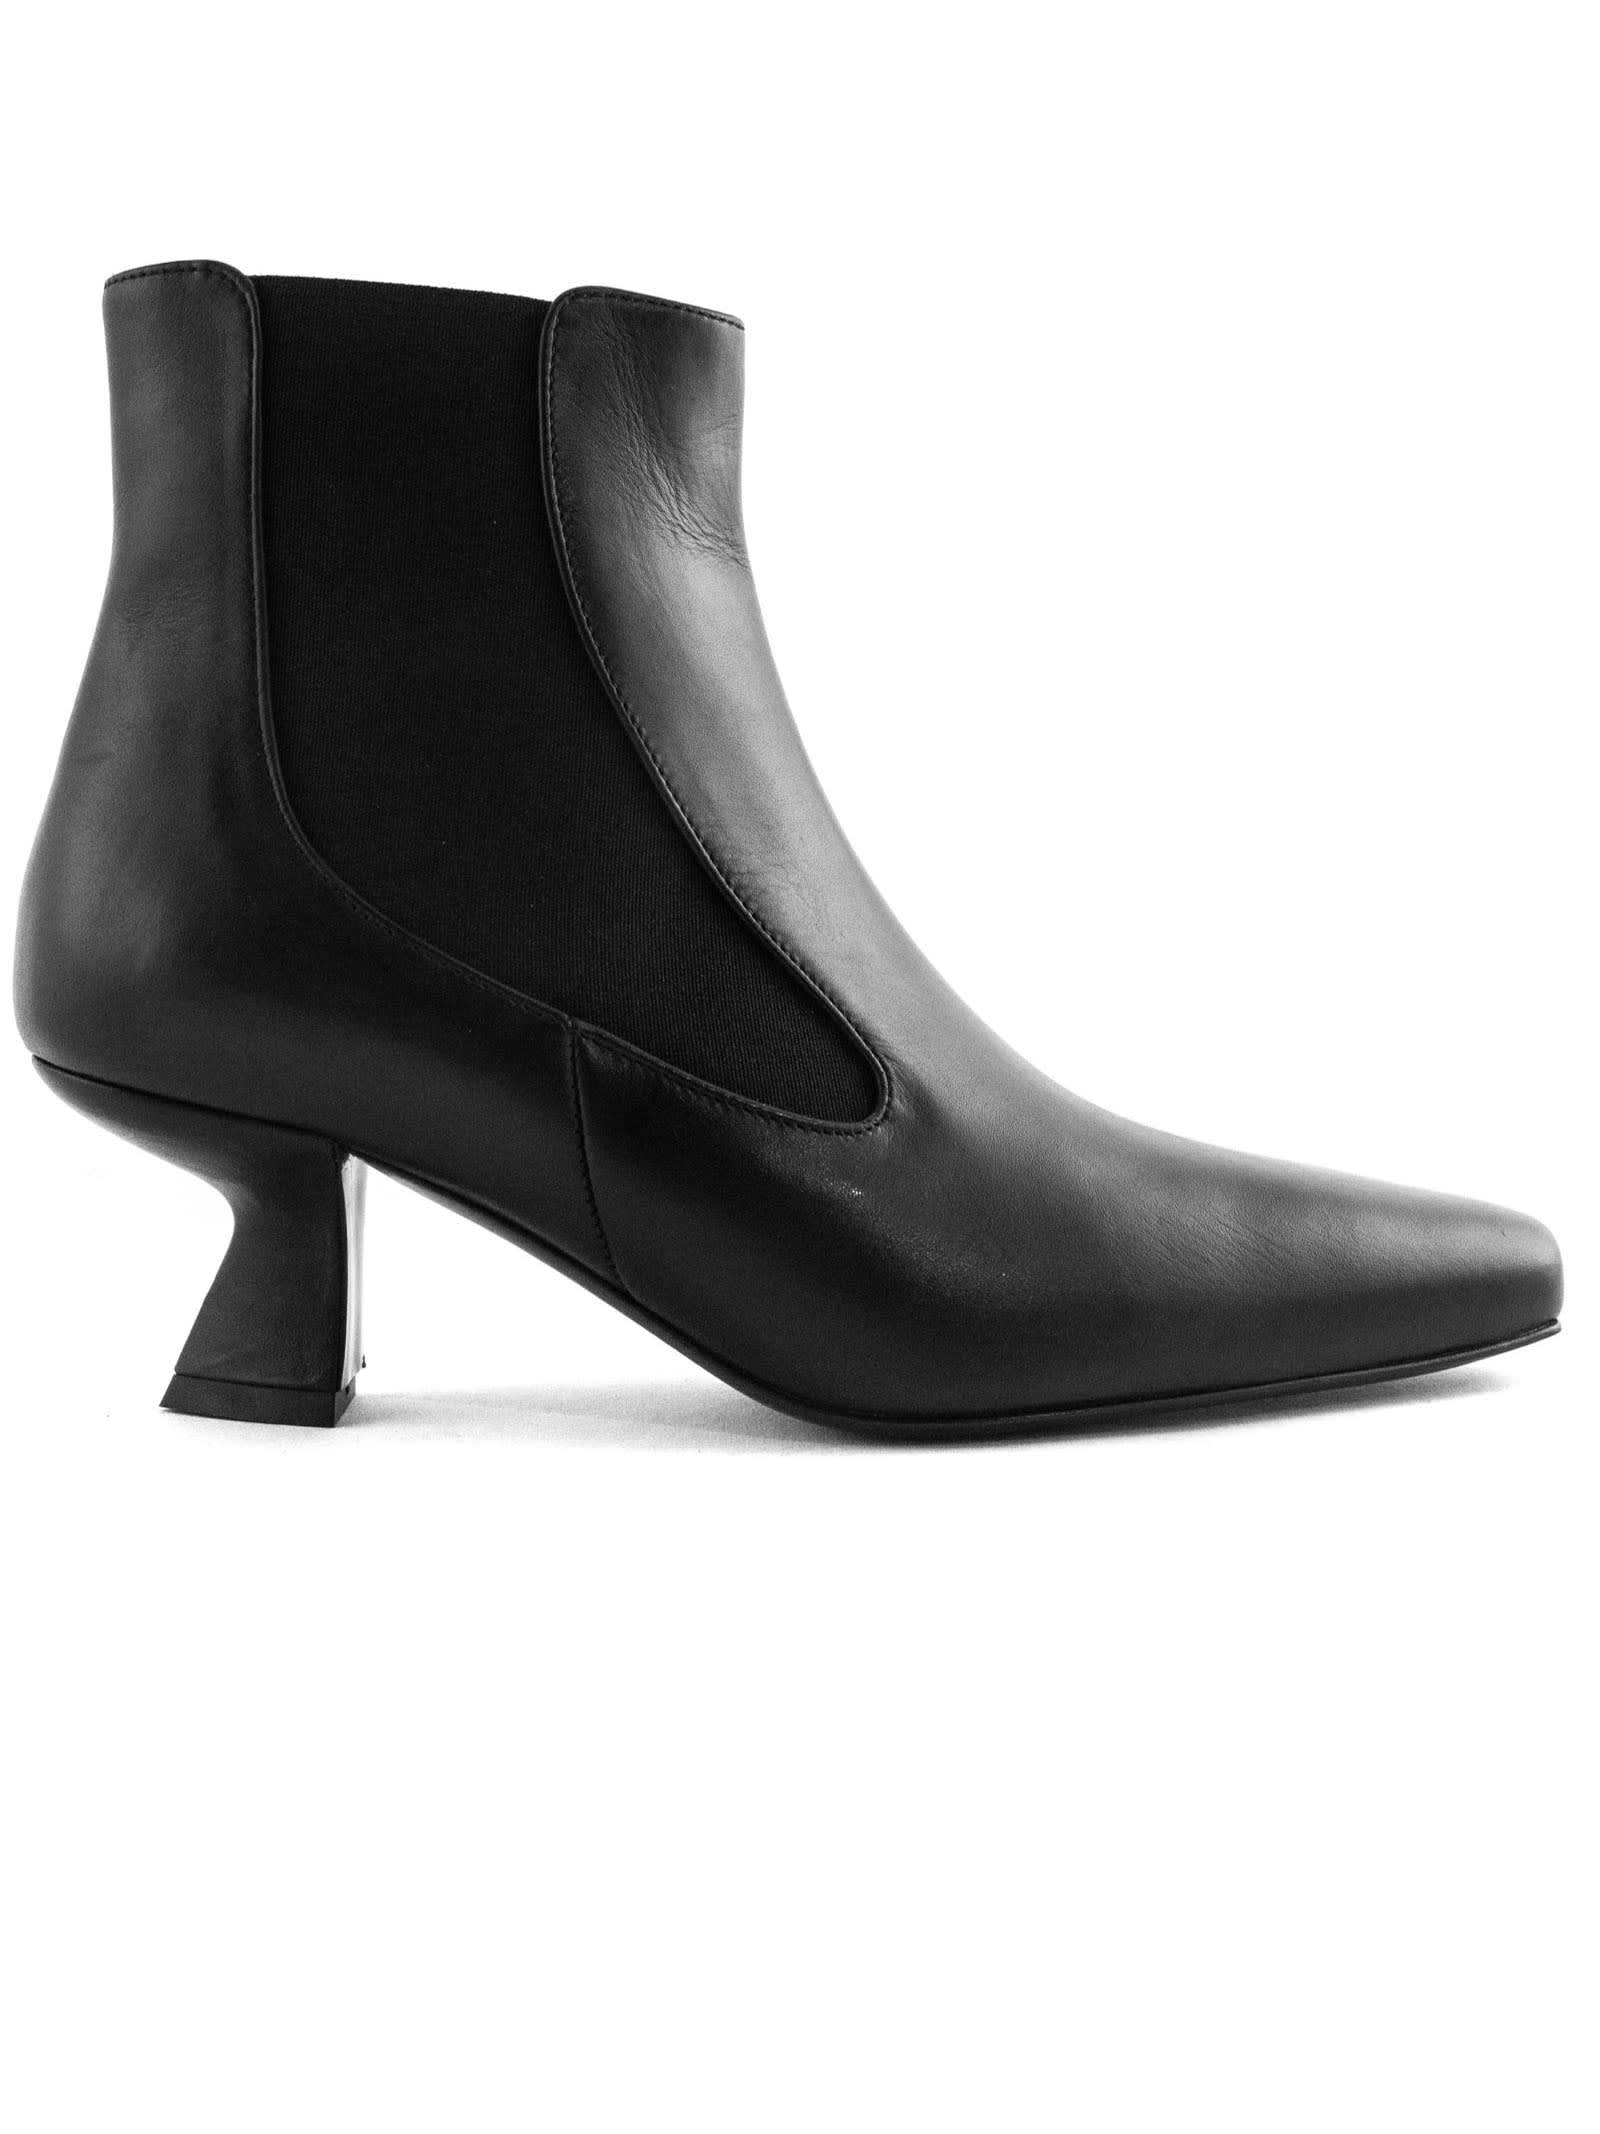 Aldo Castagna Black Leather Azzurra Ankle Boot